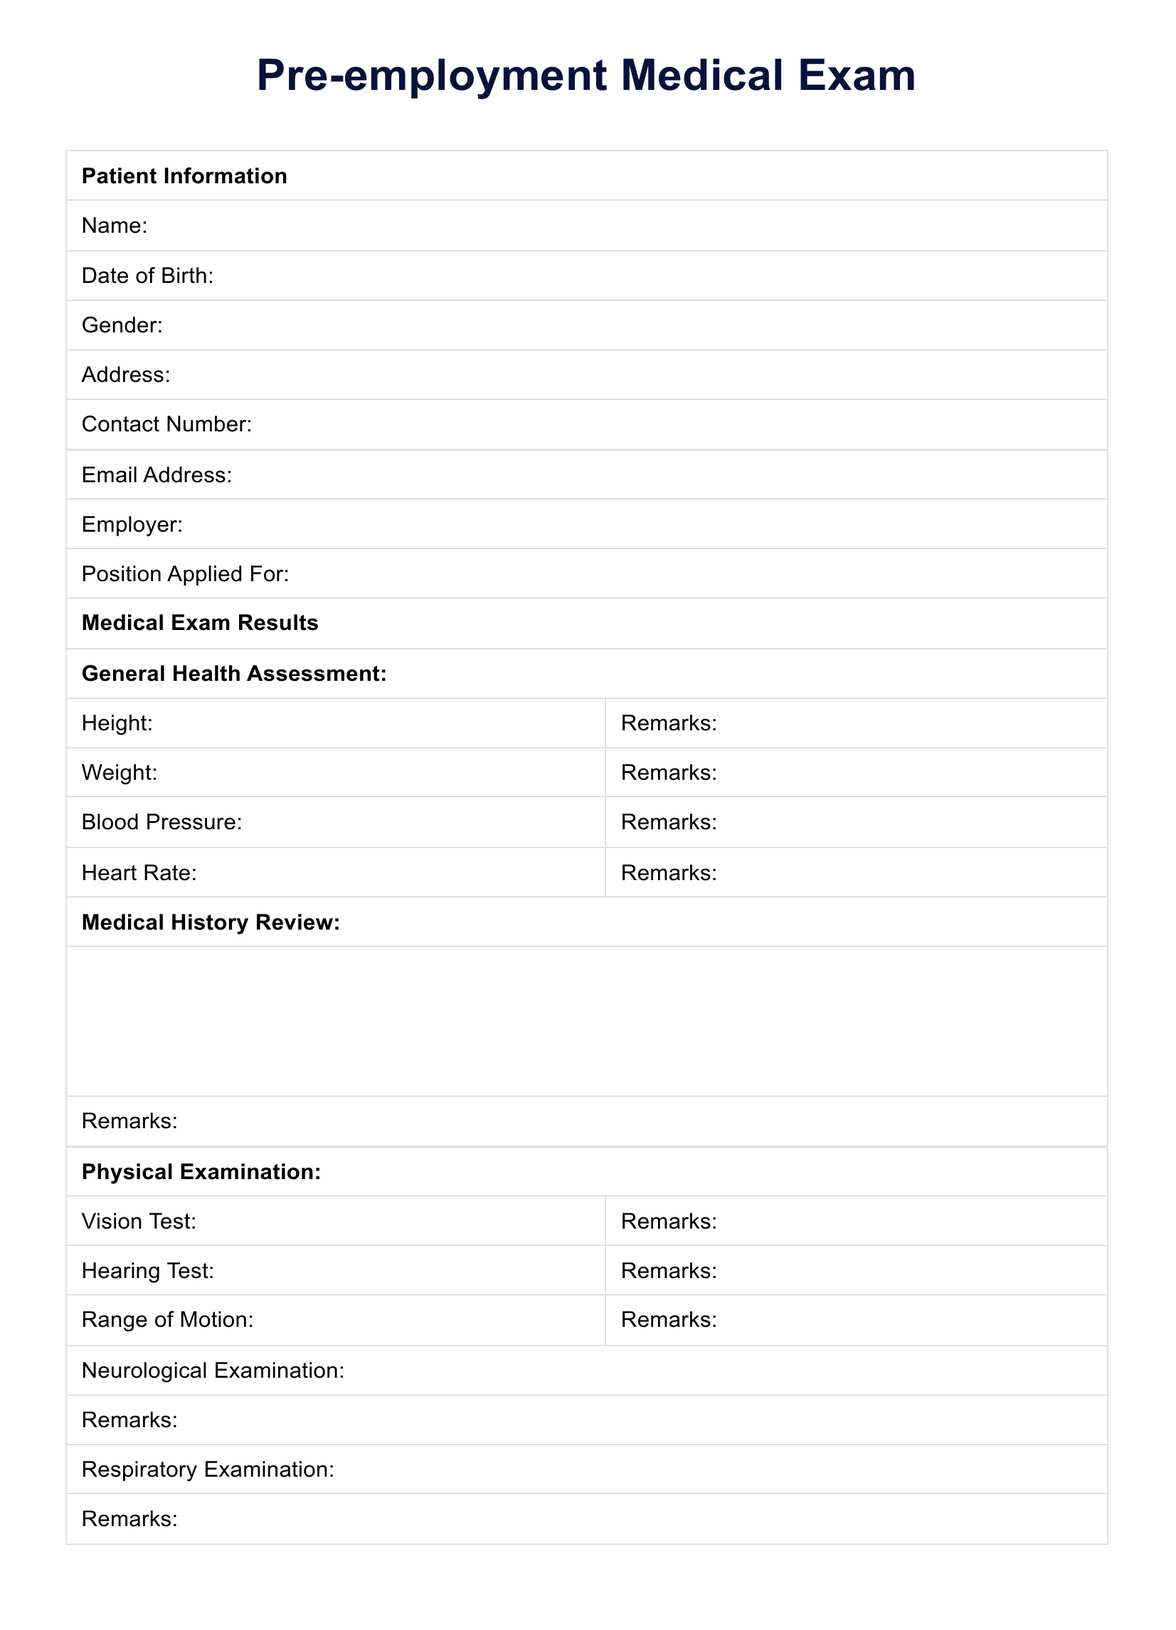 Pre-employment Medical Exam PDF Example